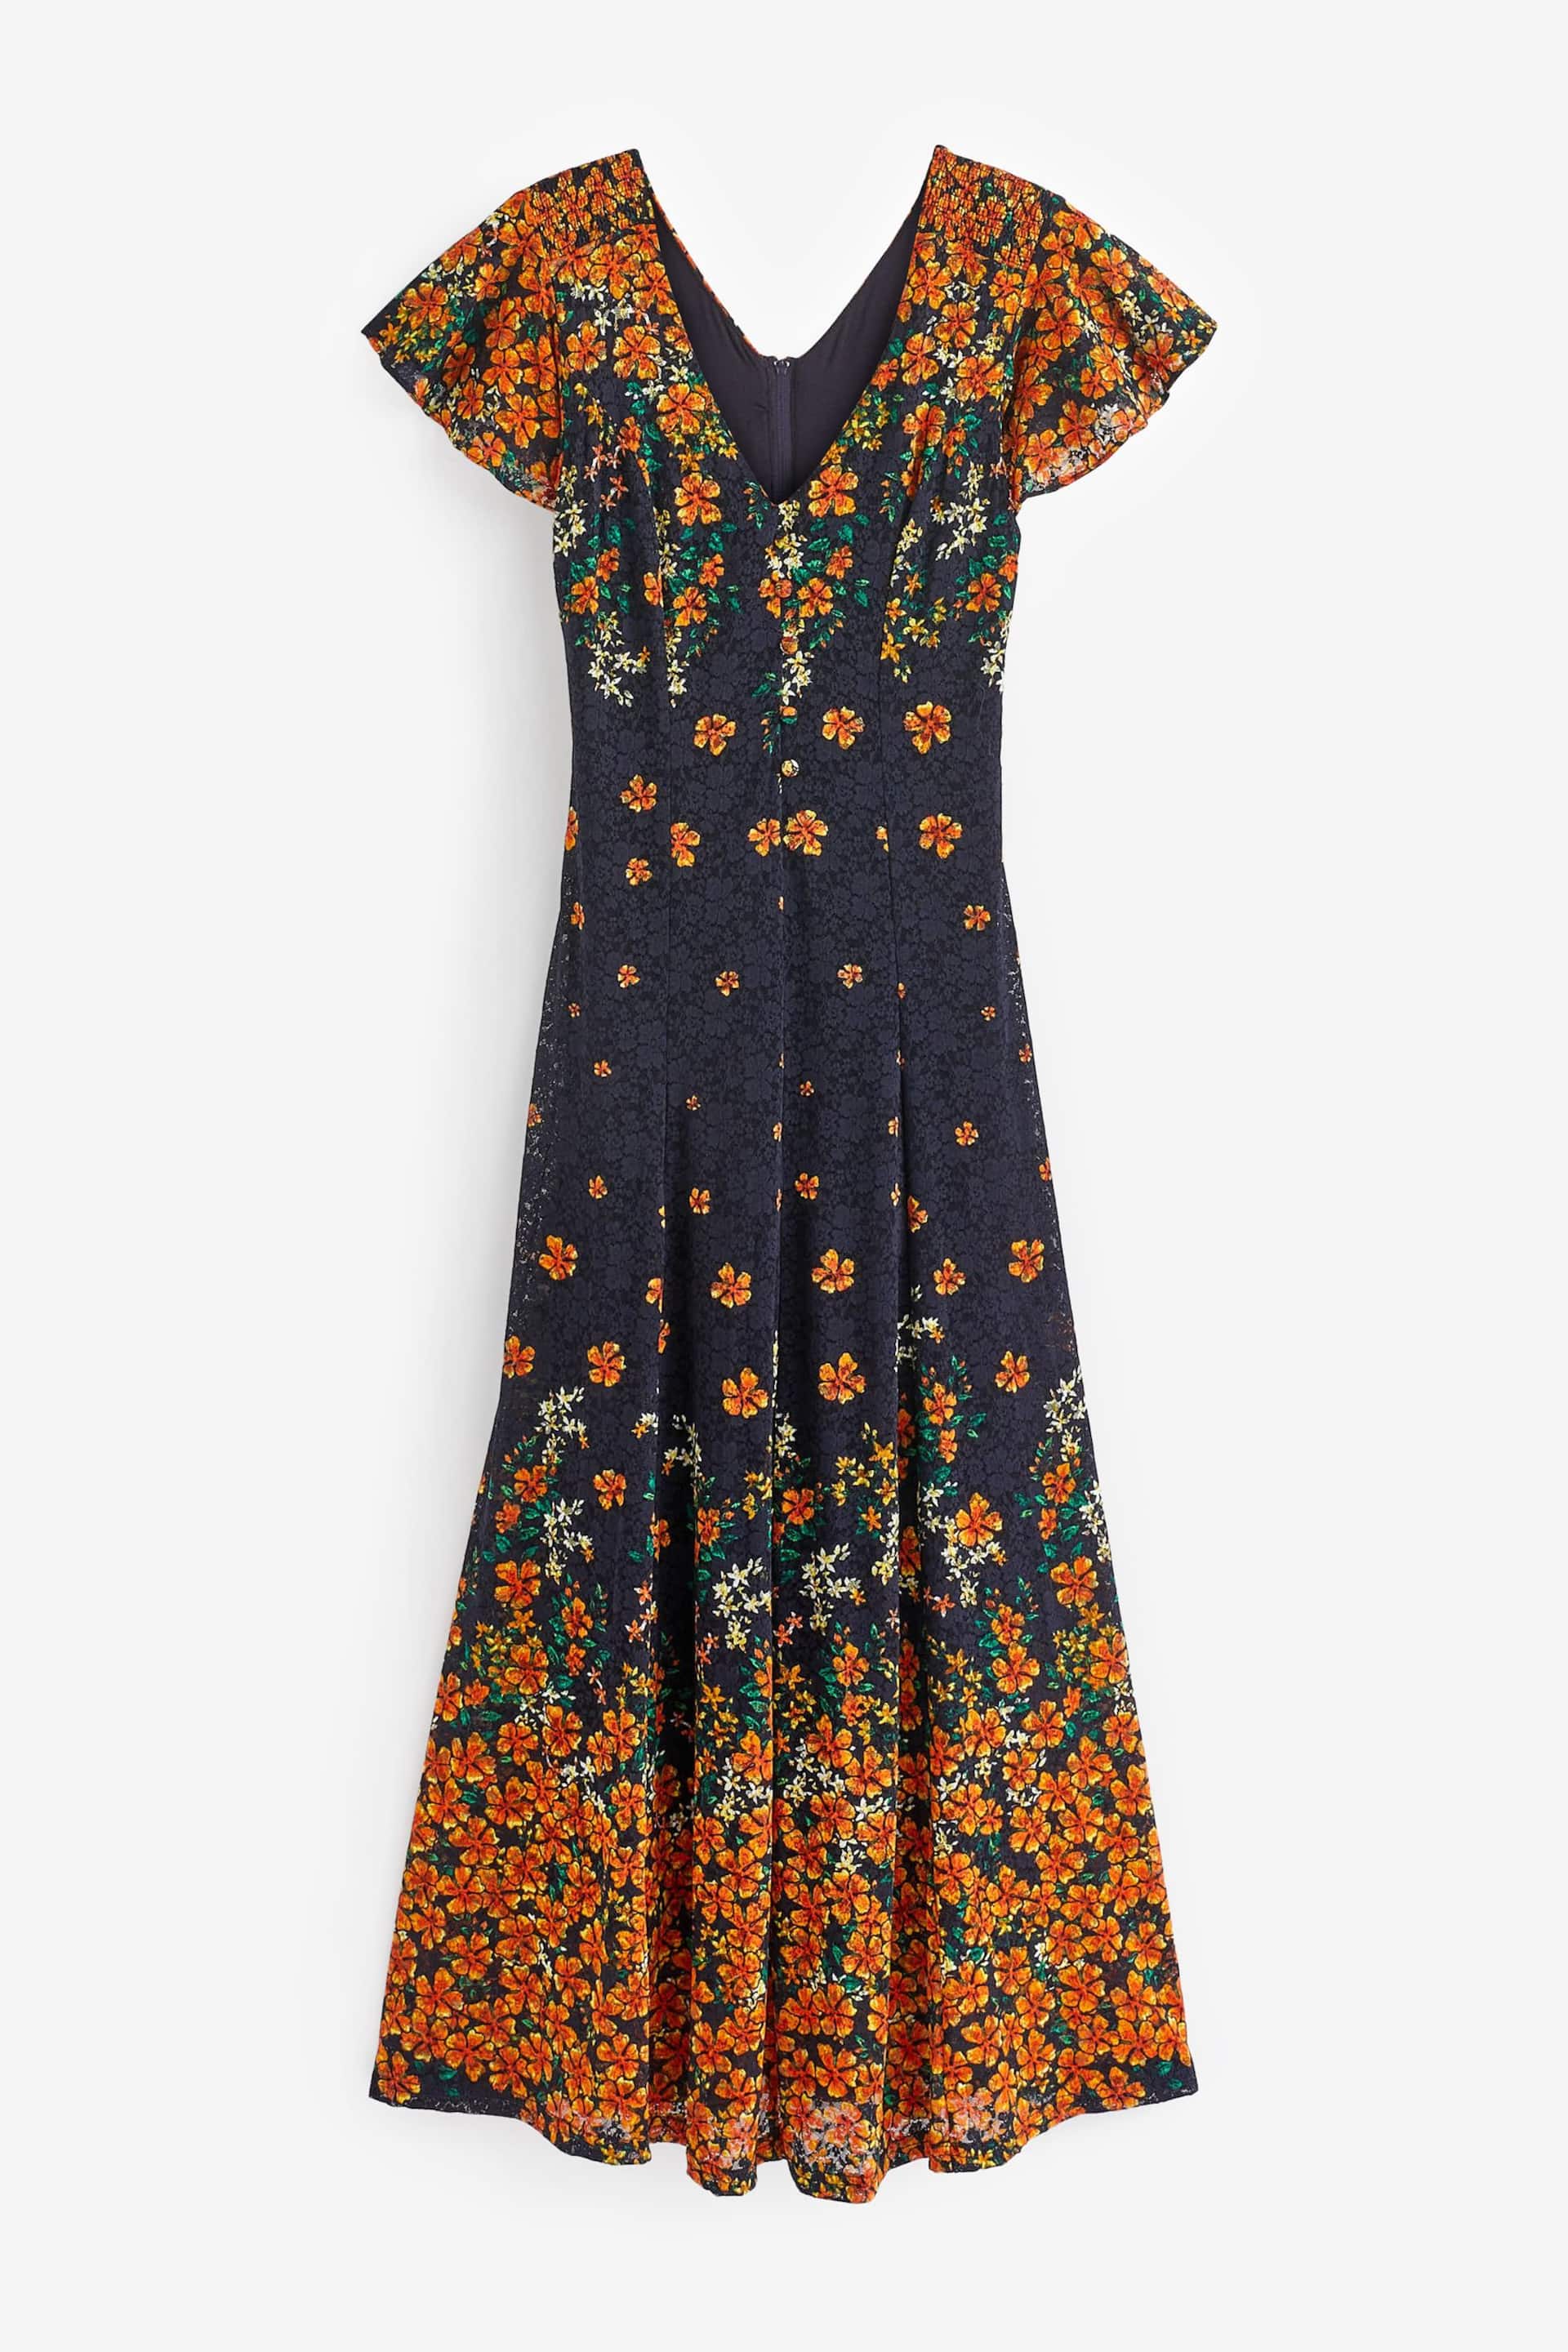 Jolie Moi Orange Lace Floral Print Fit & Flare Maxi Dress - Image 7 of 7